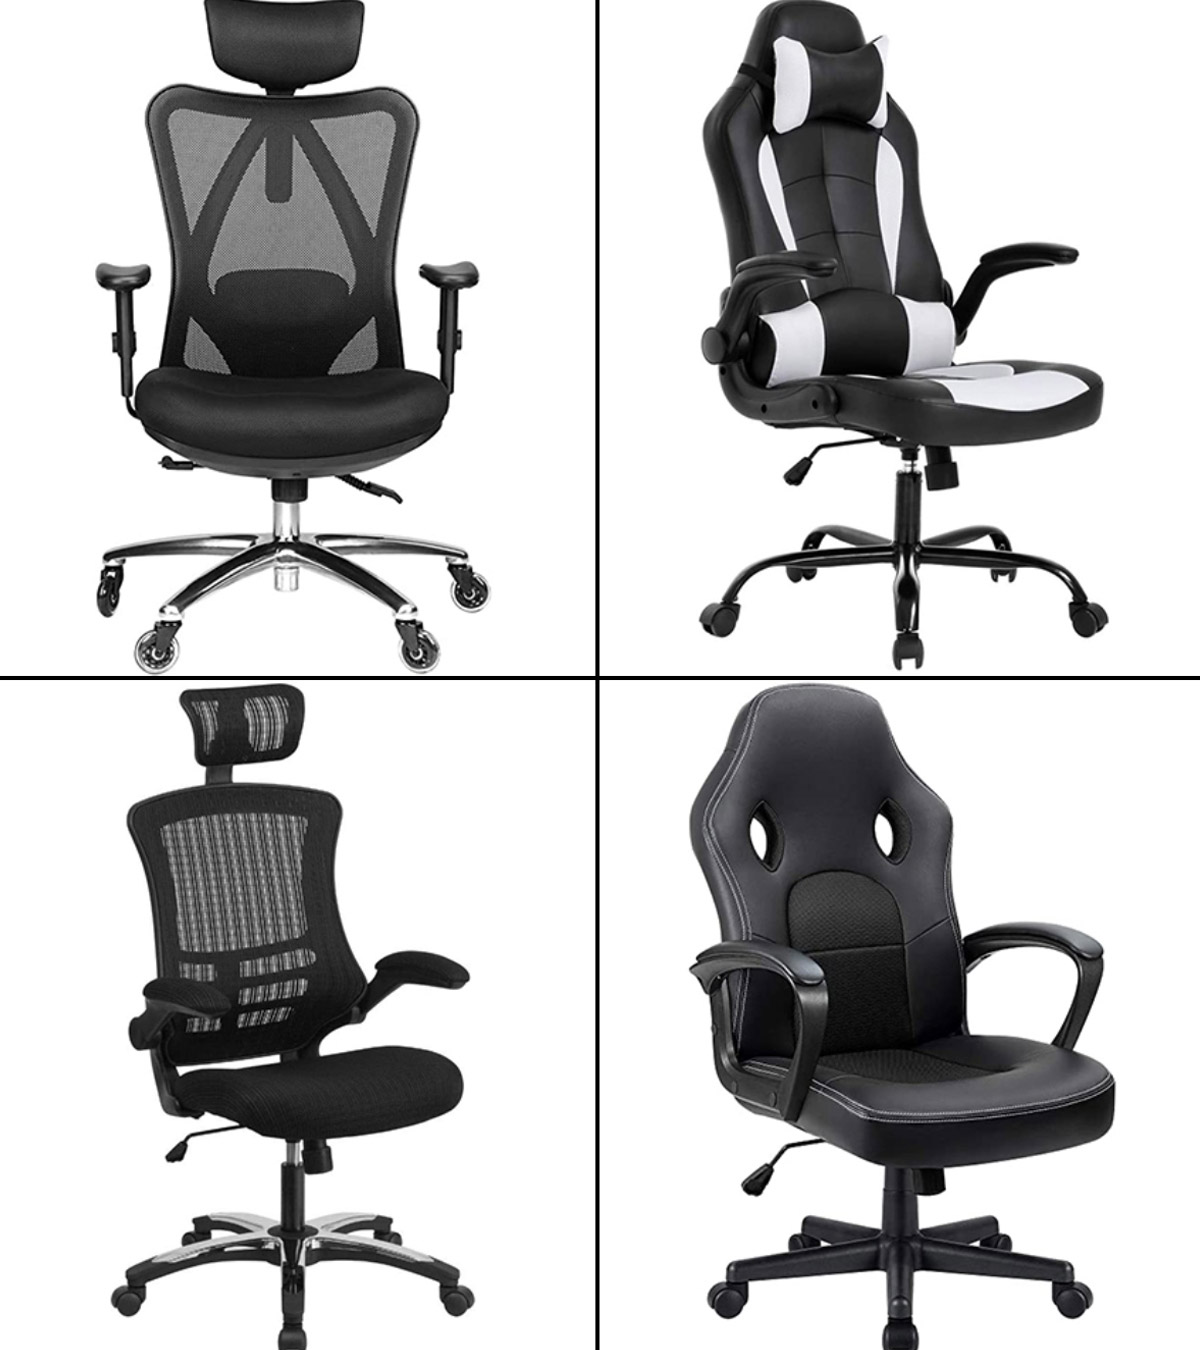 https://www.momjunction.com/wp-content/uploads/2020/06/Best-Chairs-For-Neck-Pain1.jpg